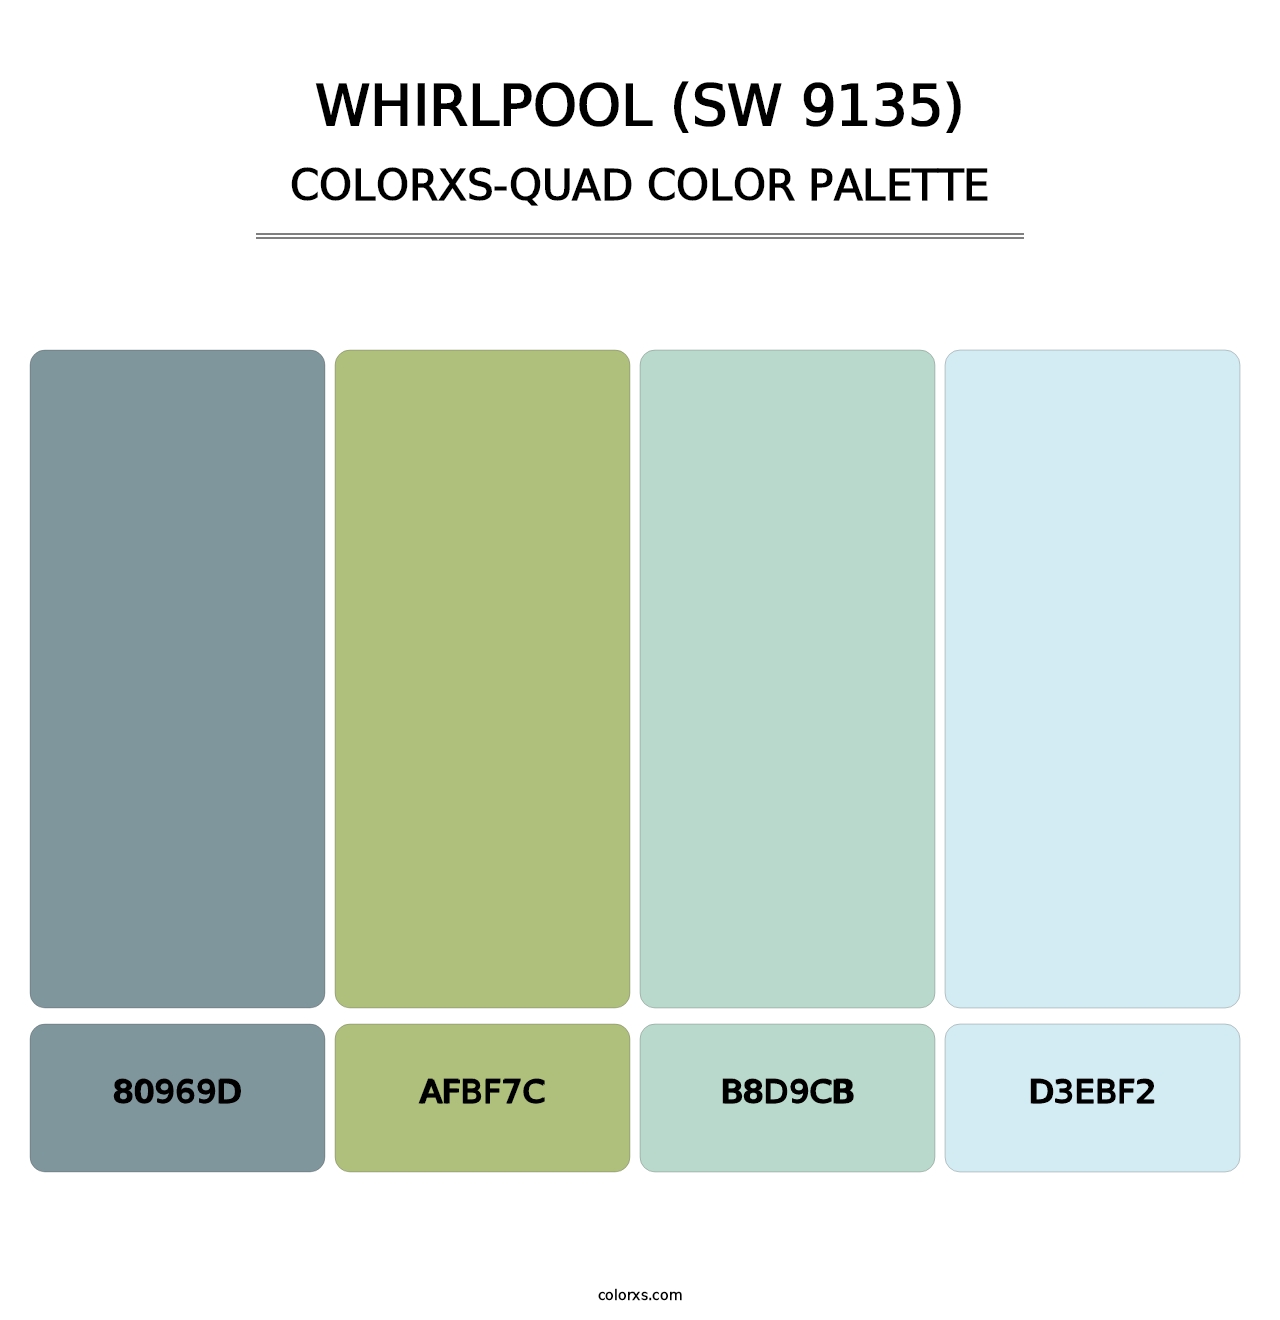 Whirlpool (SW 9135) - Colorxs Quad Palette